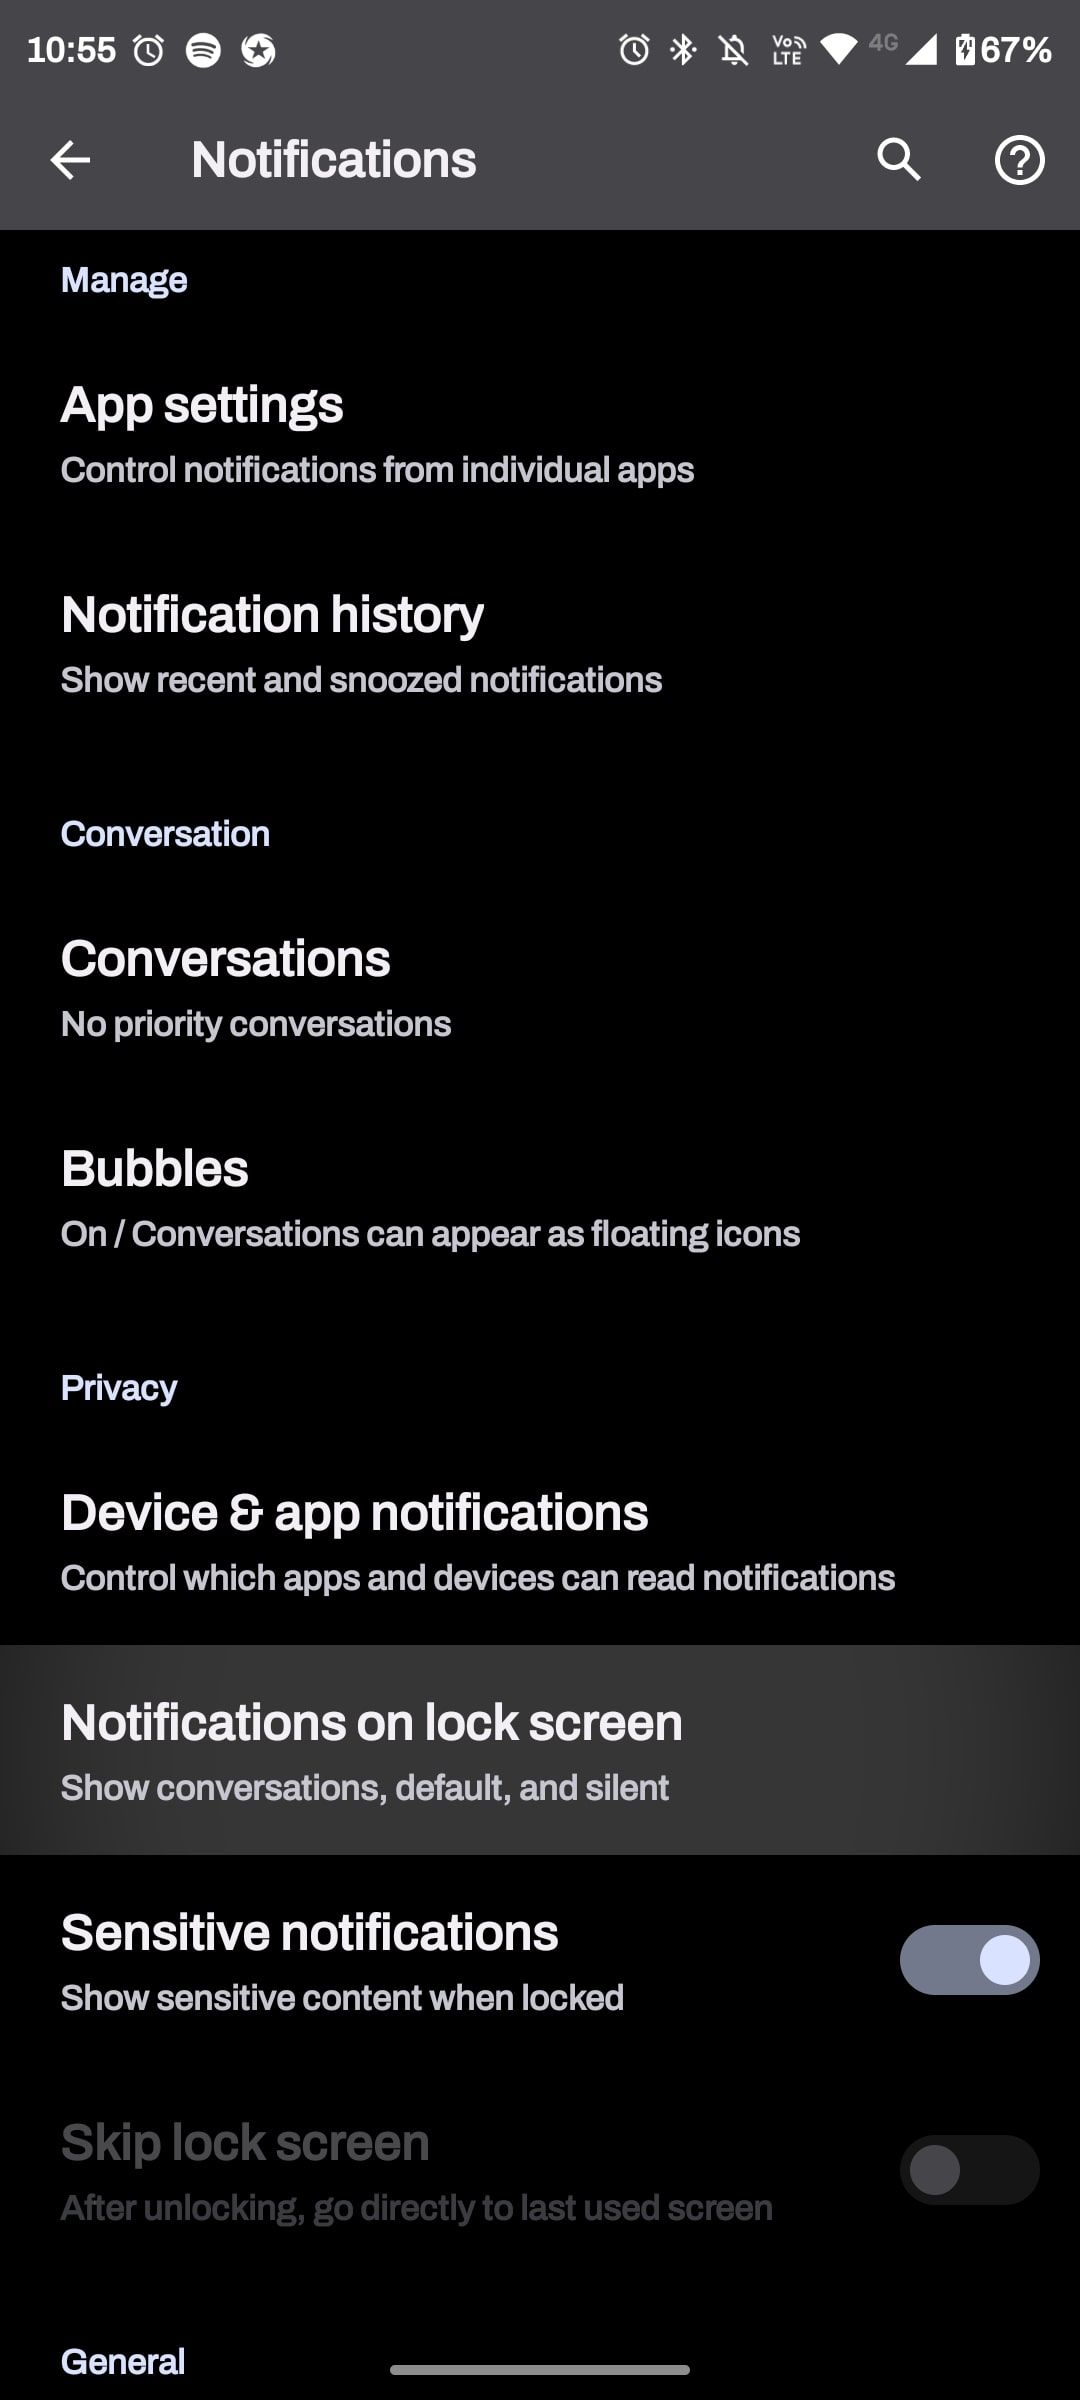 Notifications on lockscreen highlighted in notifications menu